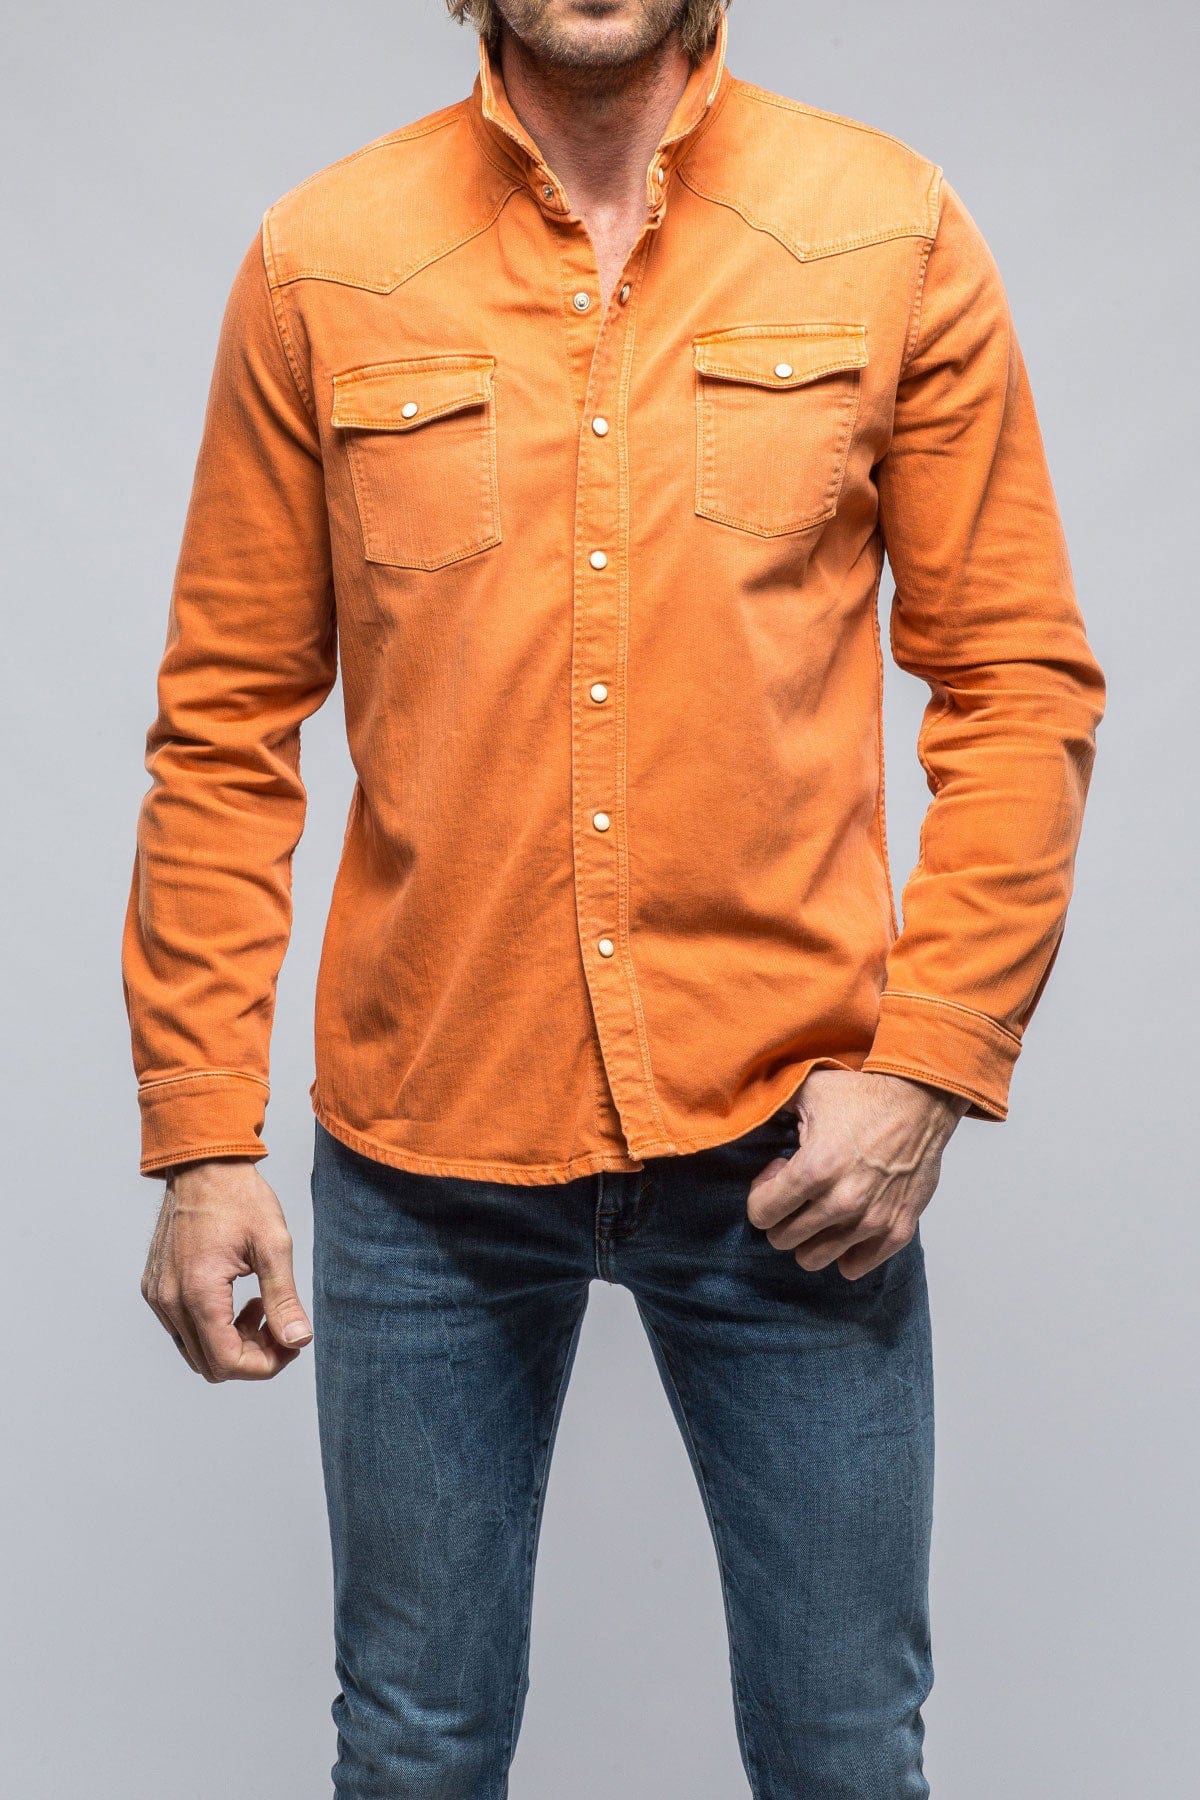 Ranger Colored Denim Snap Shirt In Arrancione - AXEL'S